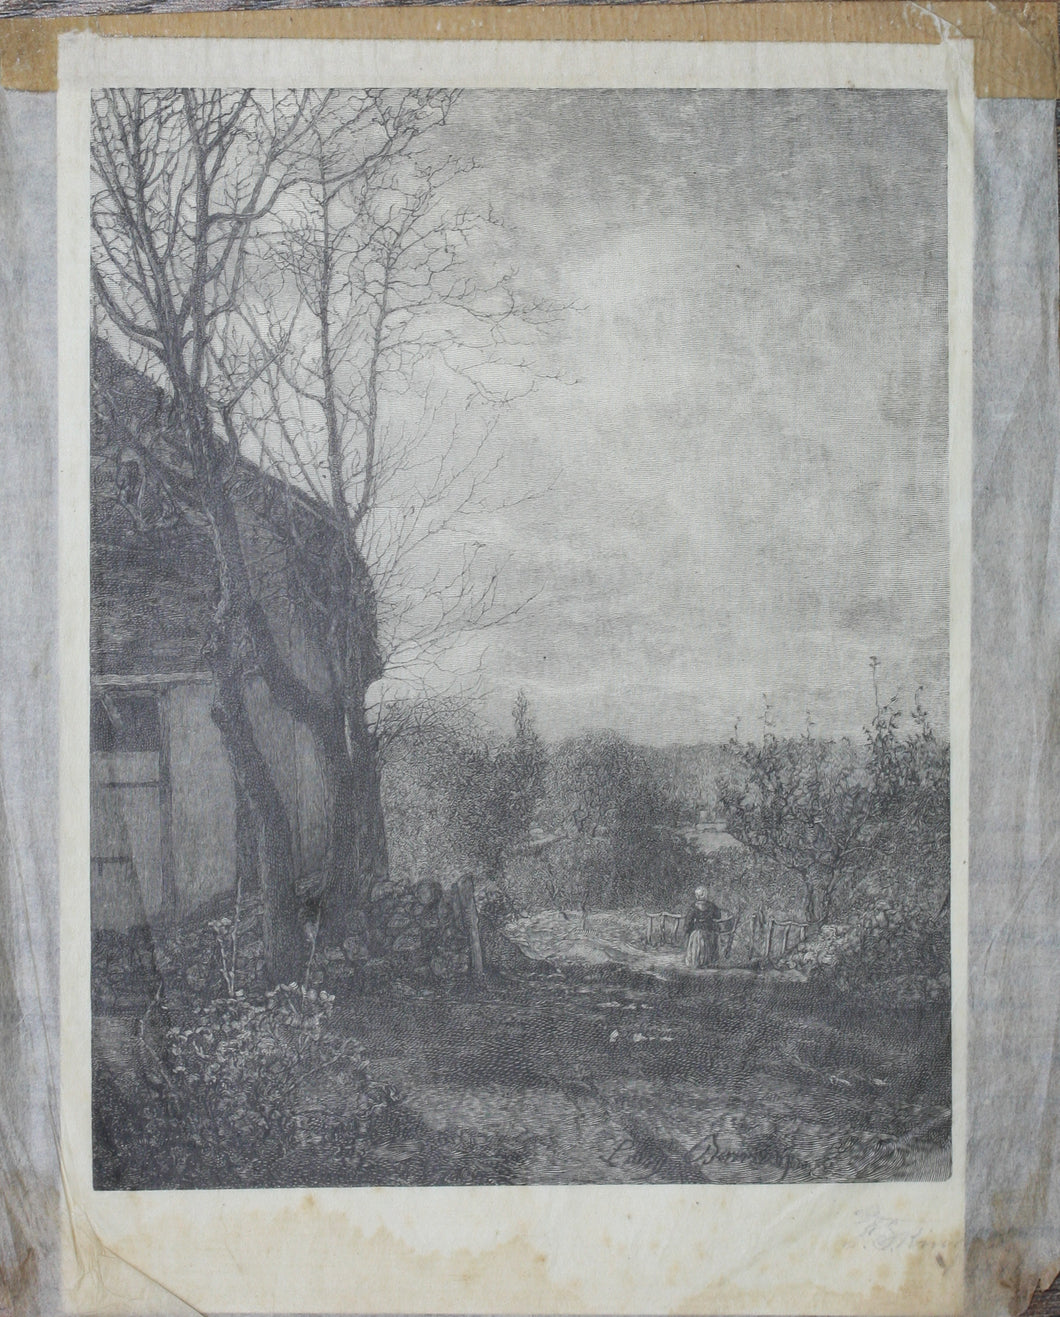 Elbridge Kingsley. Rural Landscape. Wood engraving. Late XIX C.